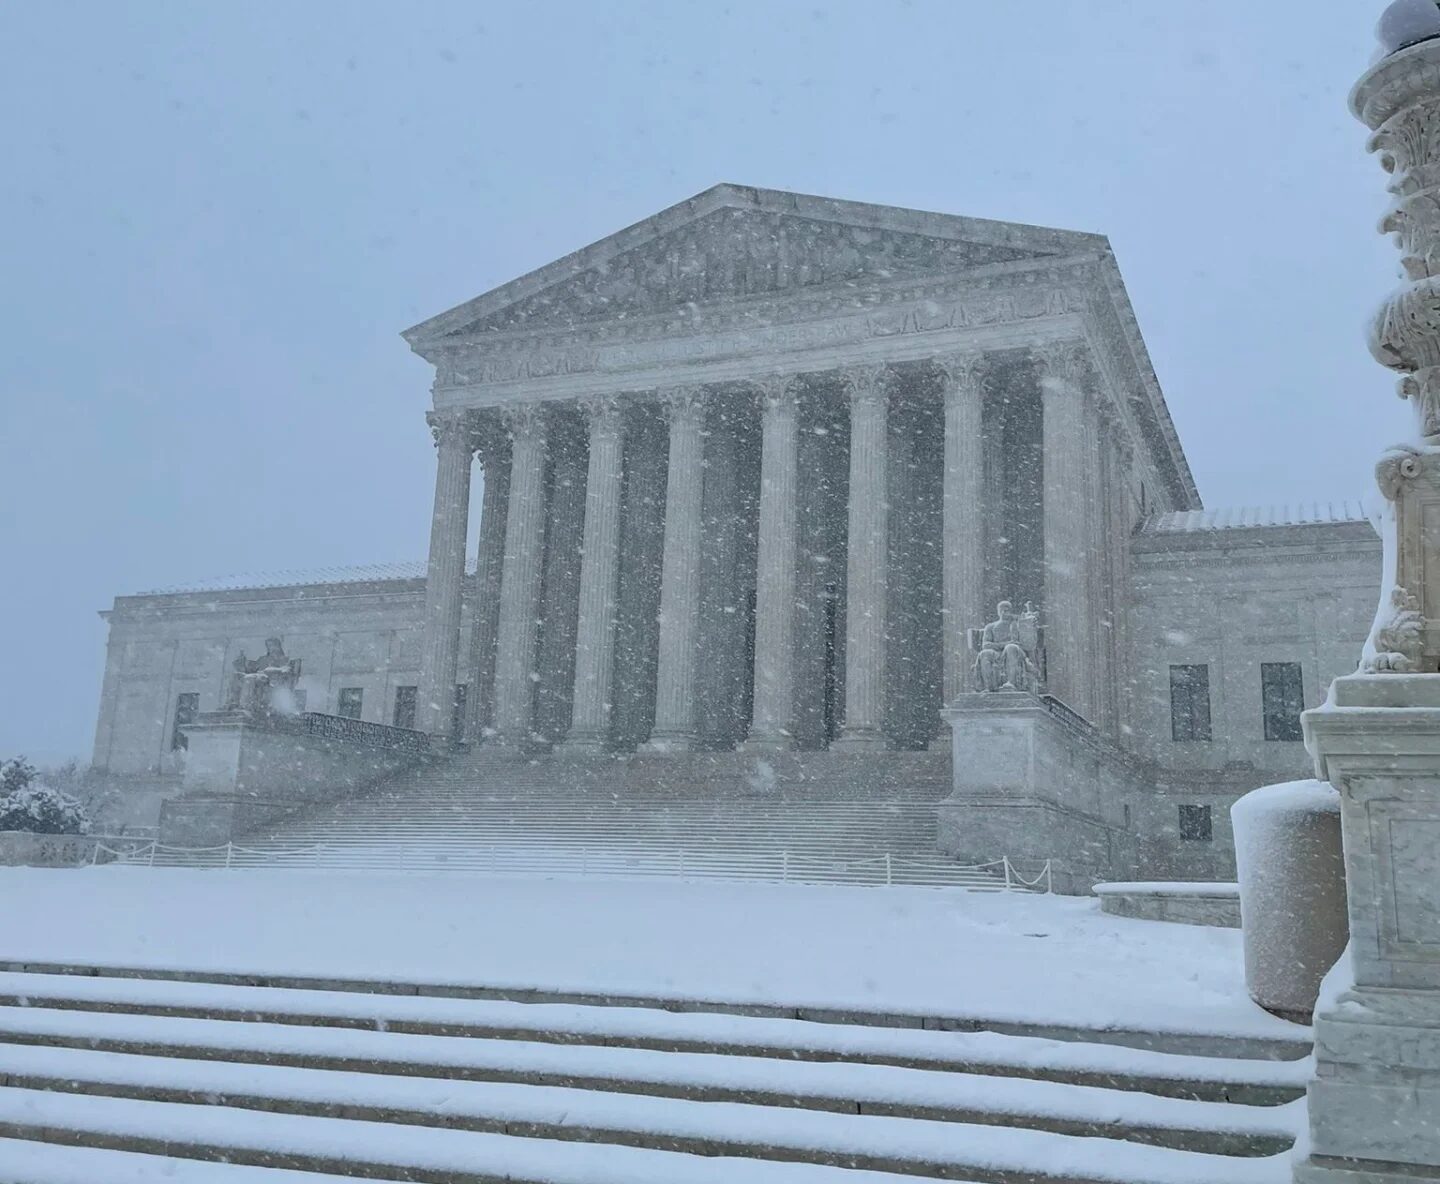 Snowfall in Washington, D.C., on Monday